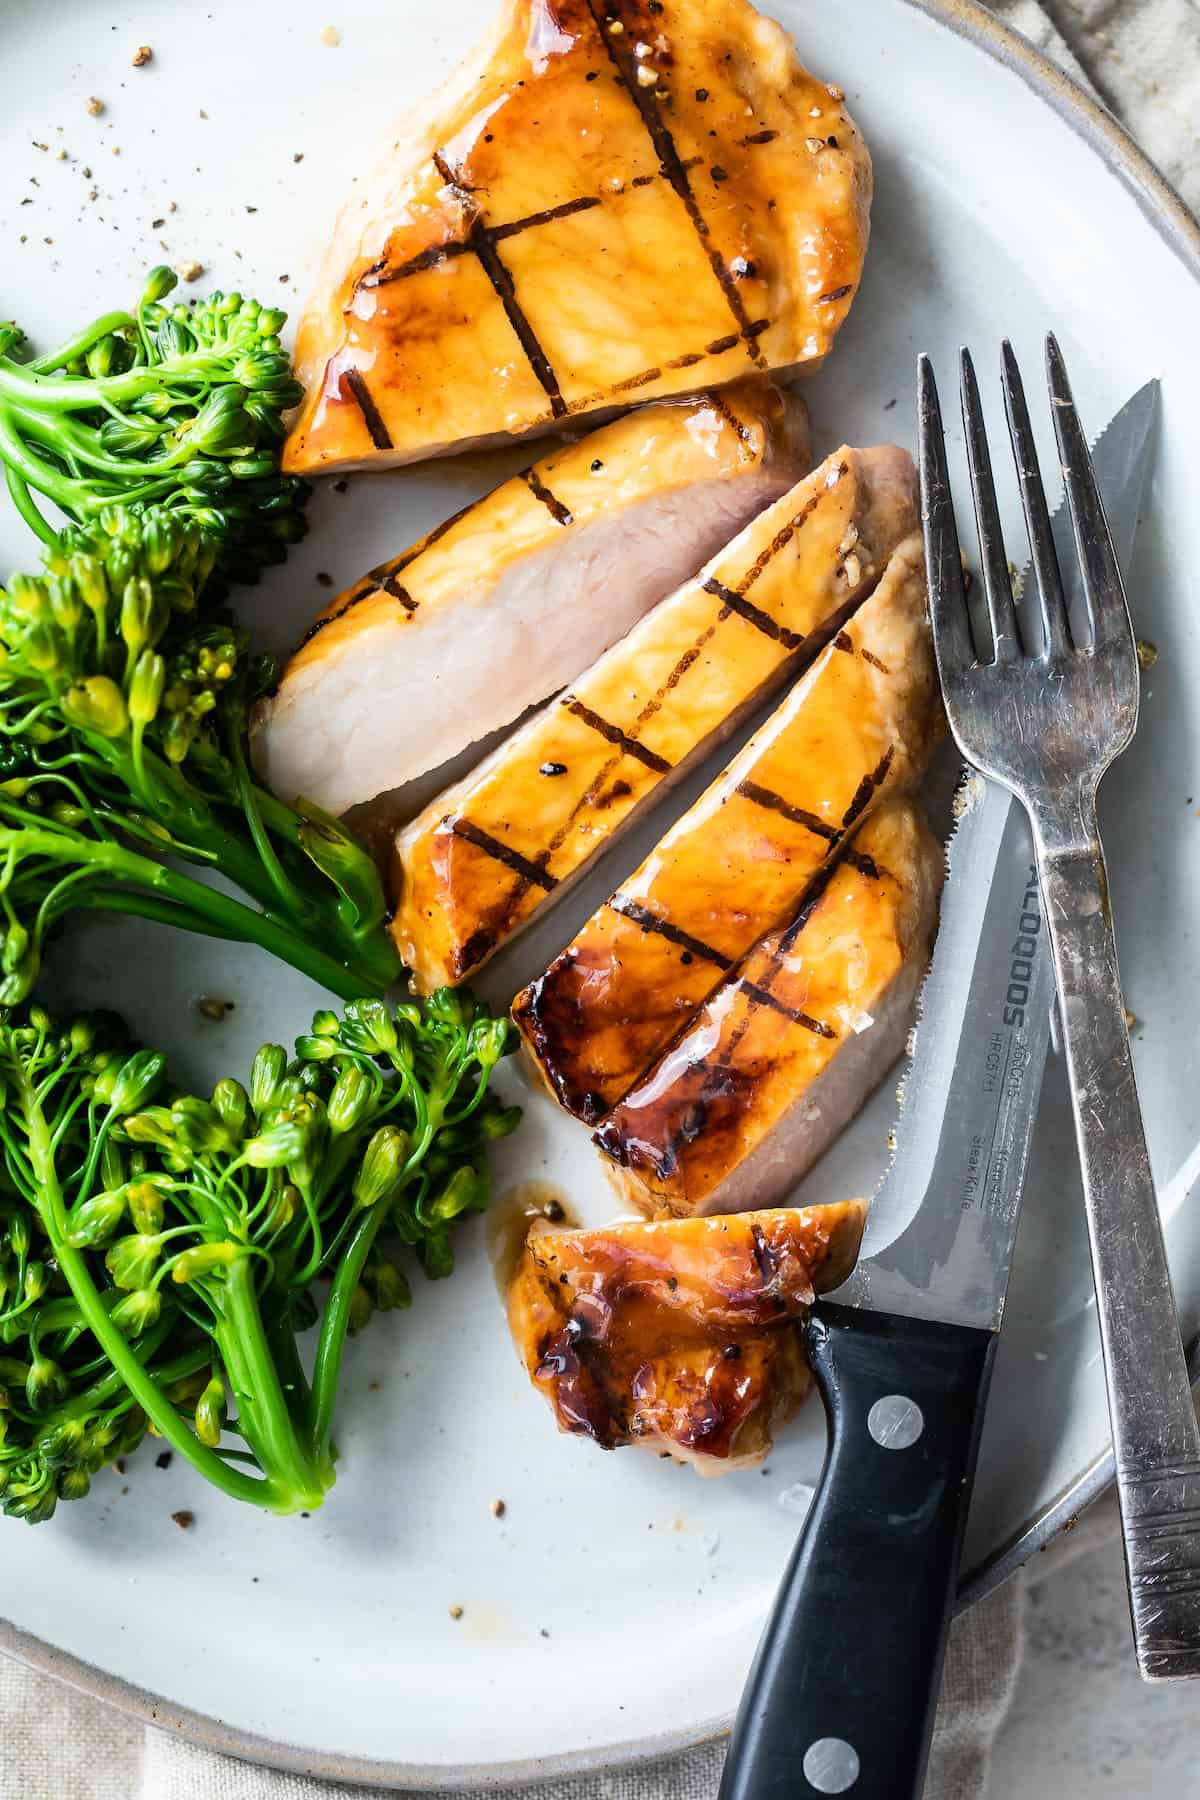 A Sliced Honey Pork Chop on a Plate with a Fork and Knife